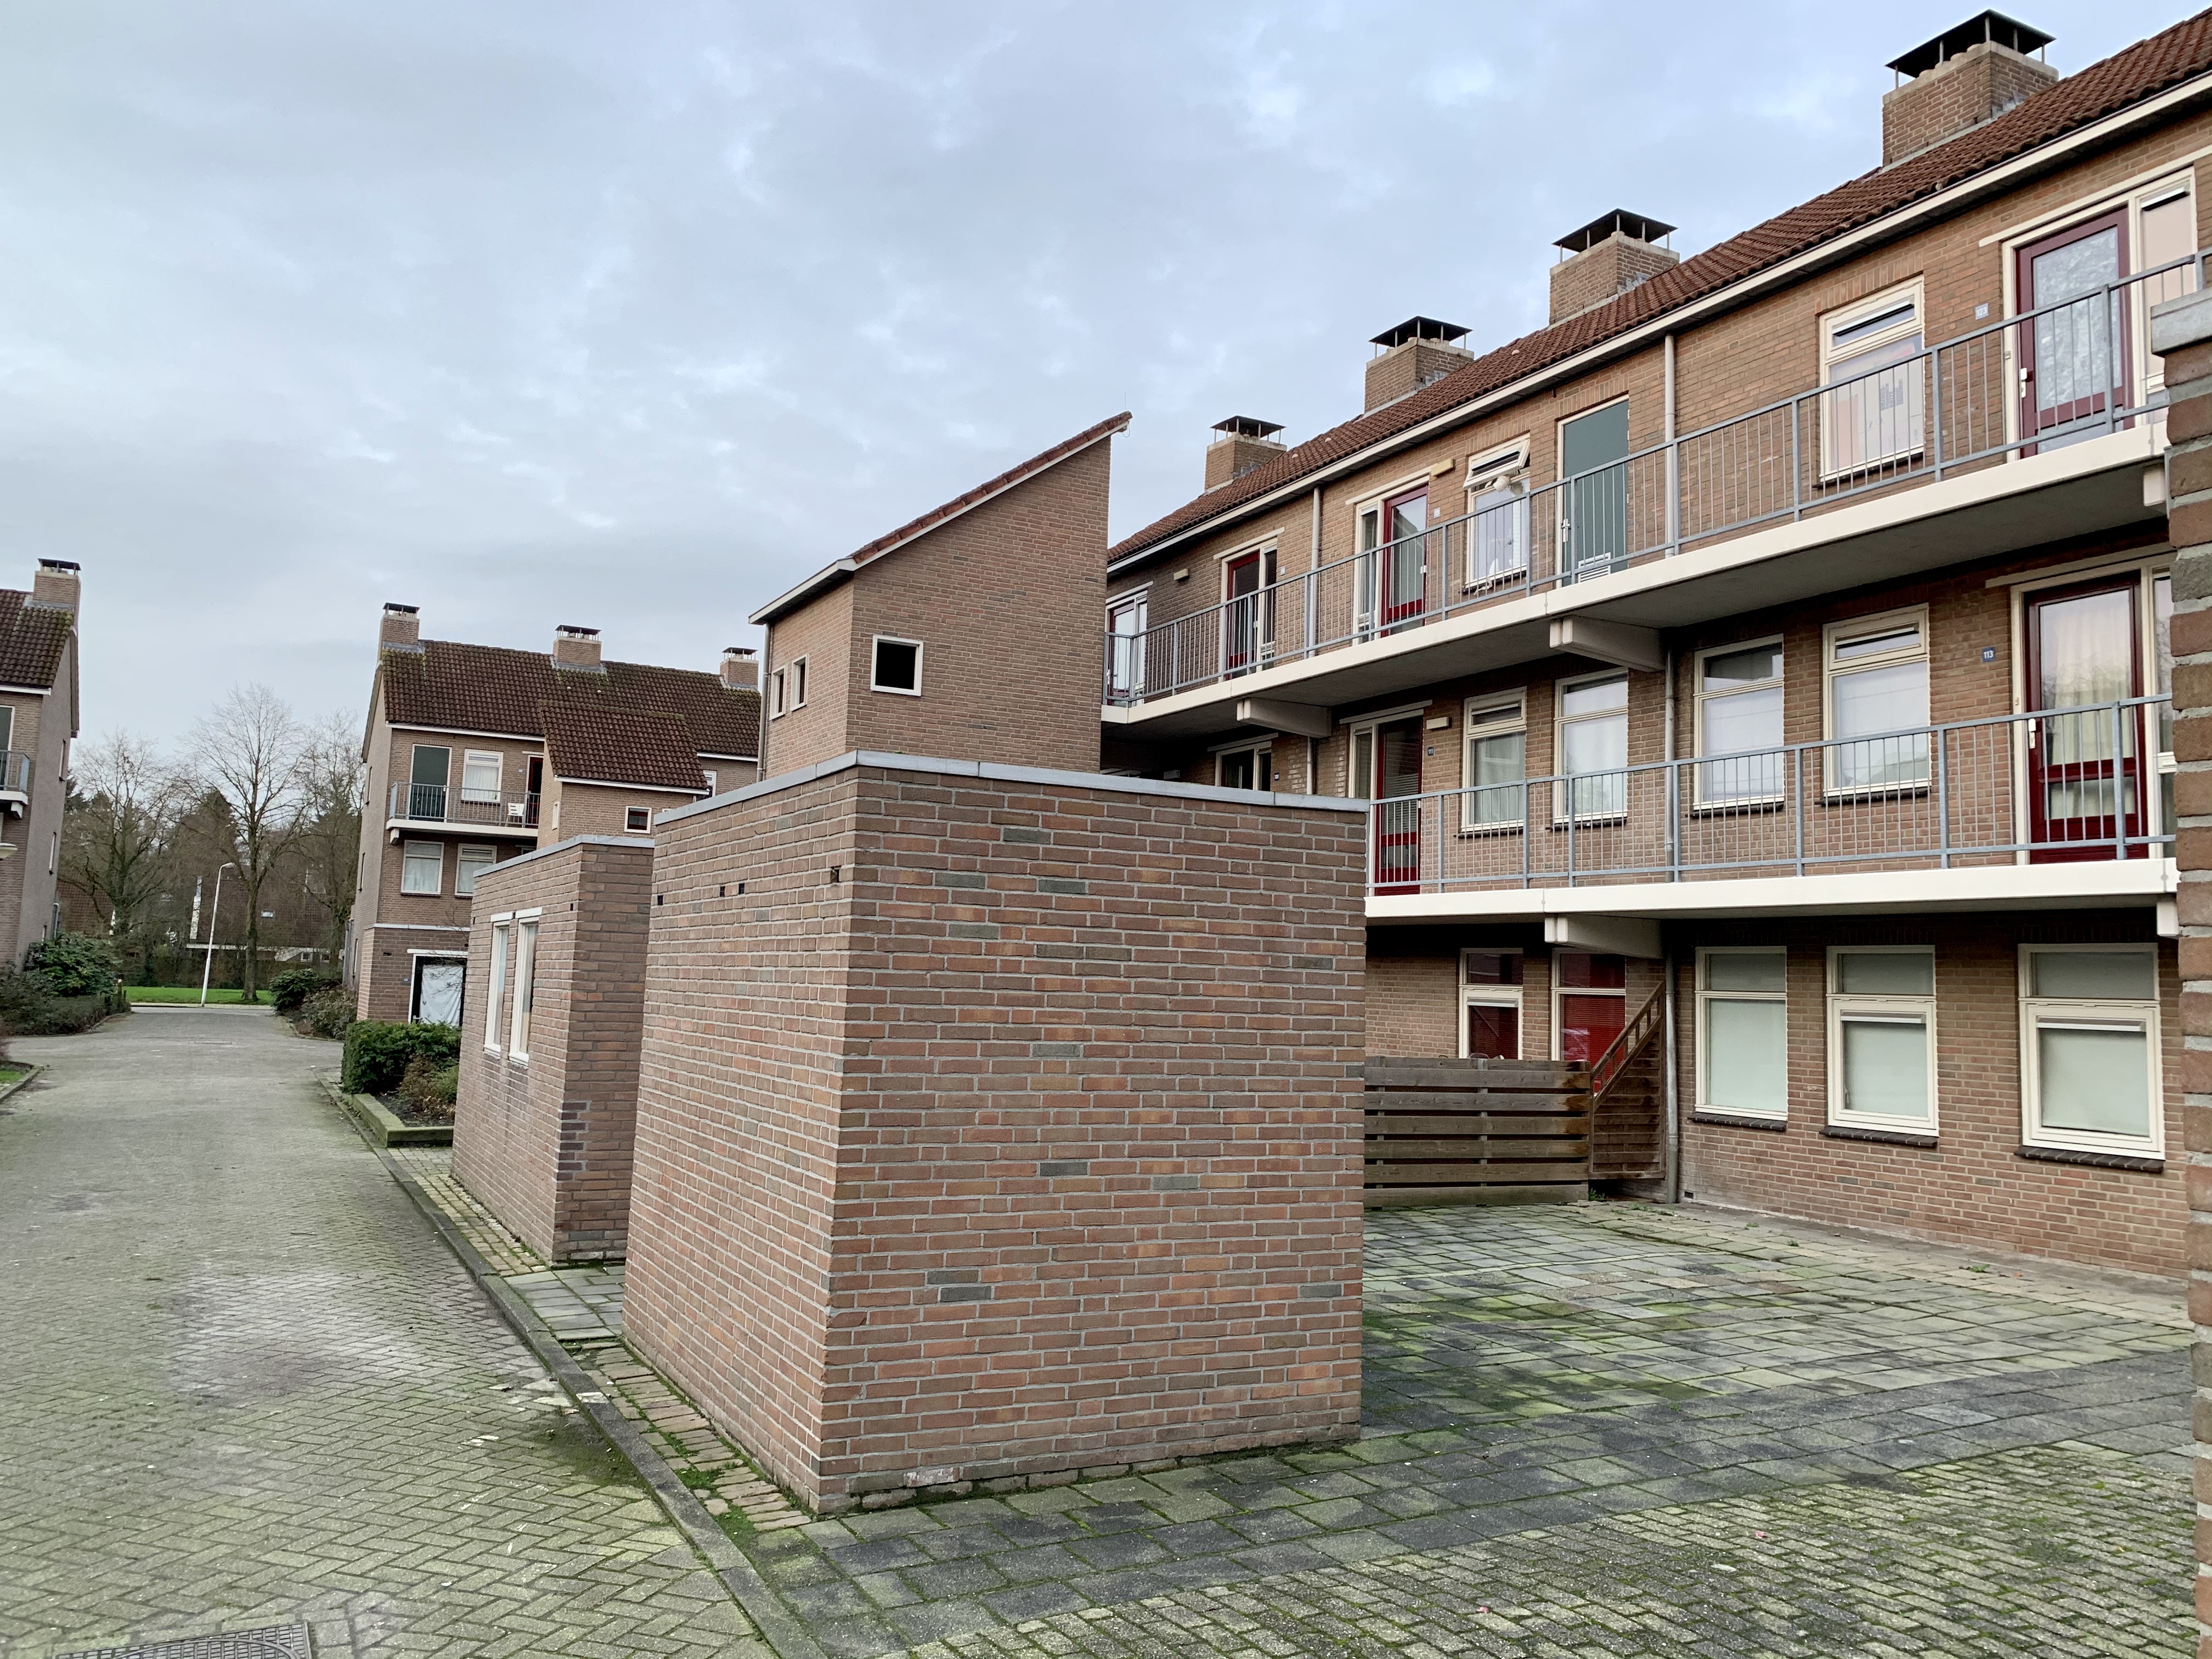 Hooizolder 121, 9205 CJ Drachten, Nederland